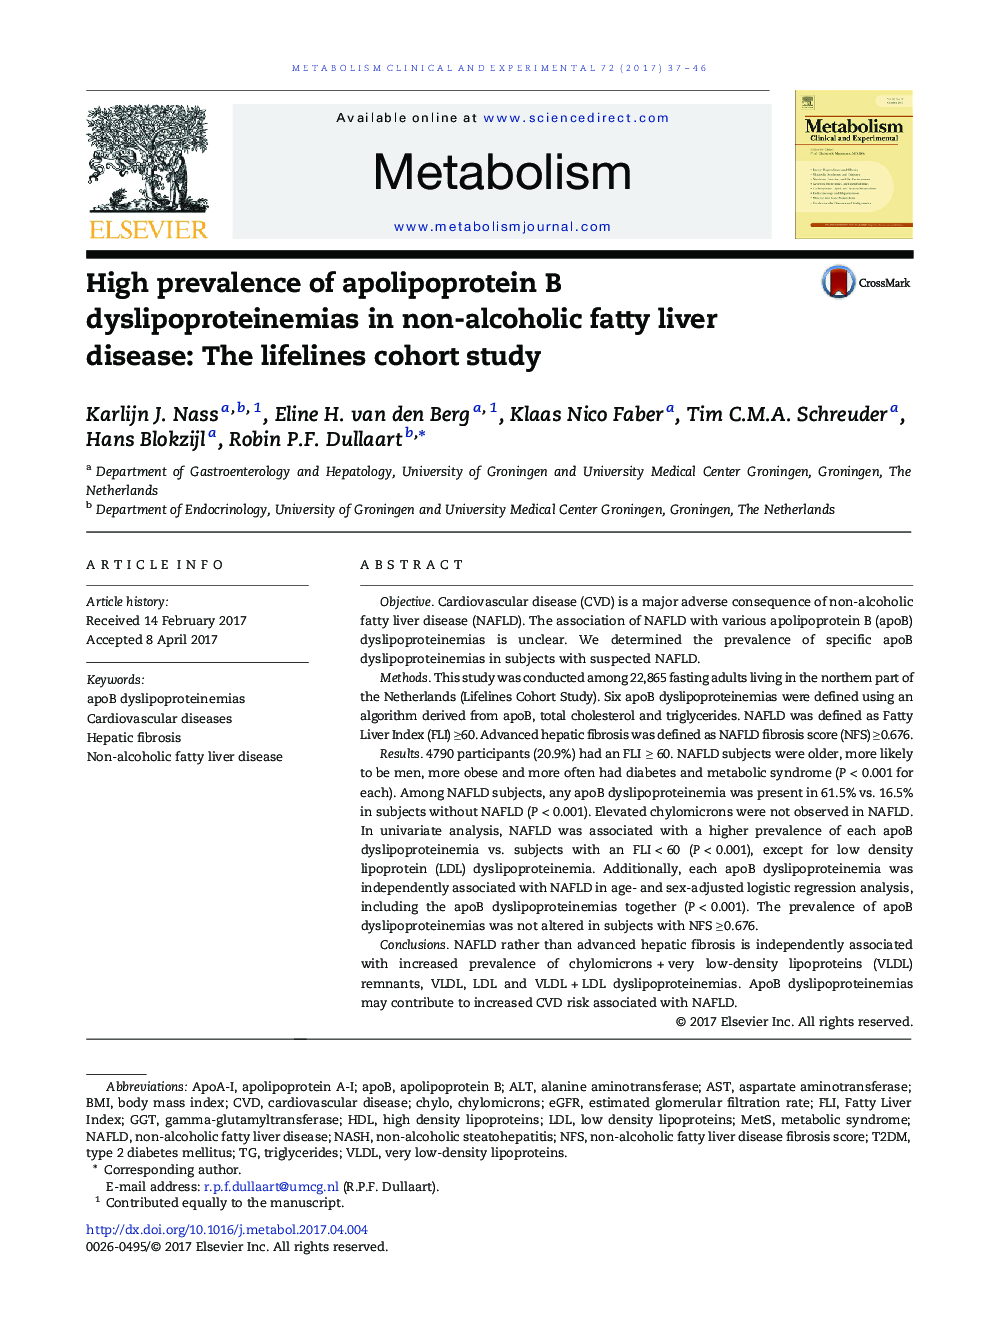 High prevalence of apolipoprotein B dyslipoproteinemias in non-alcoholic fatty liver disease: The lifelines cohort study